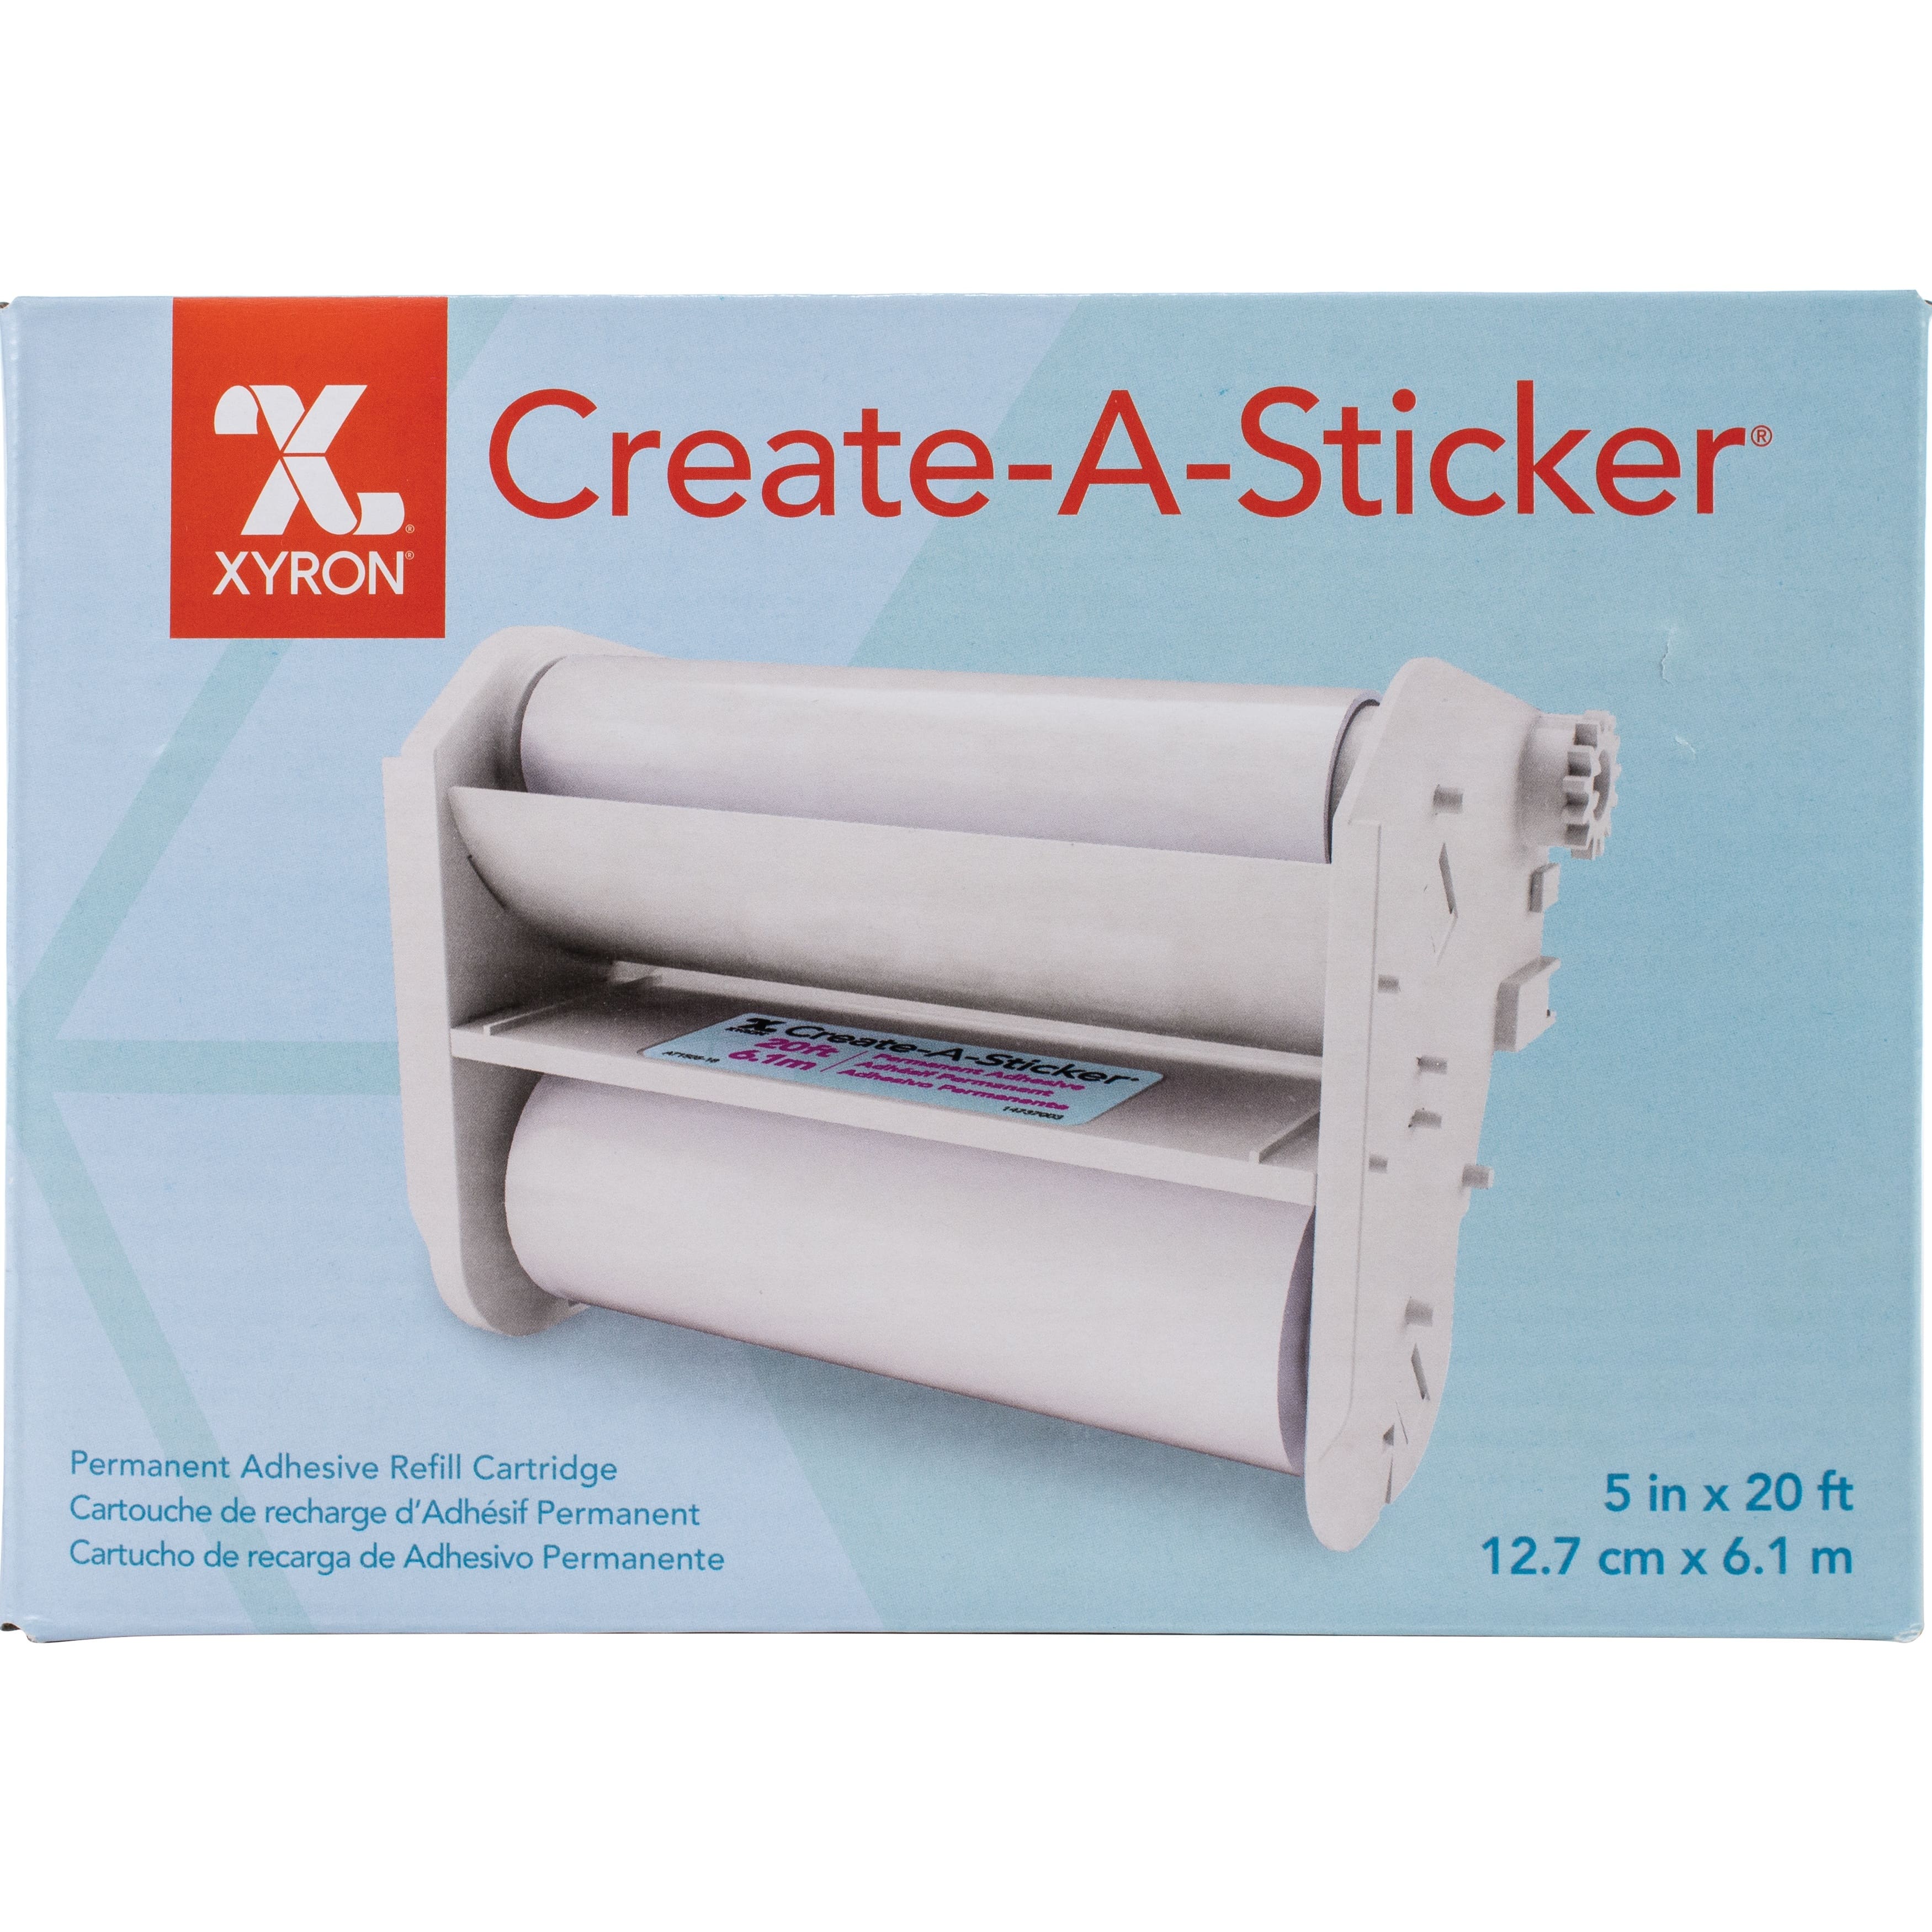 Xyron Create-A-Sticker, CREATE-A-STICKER